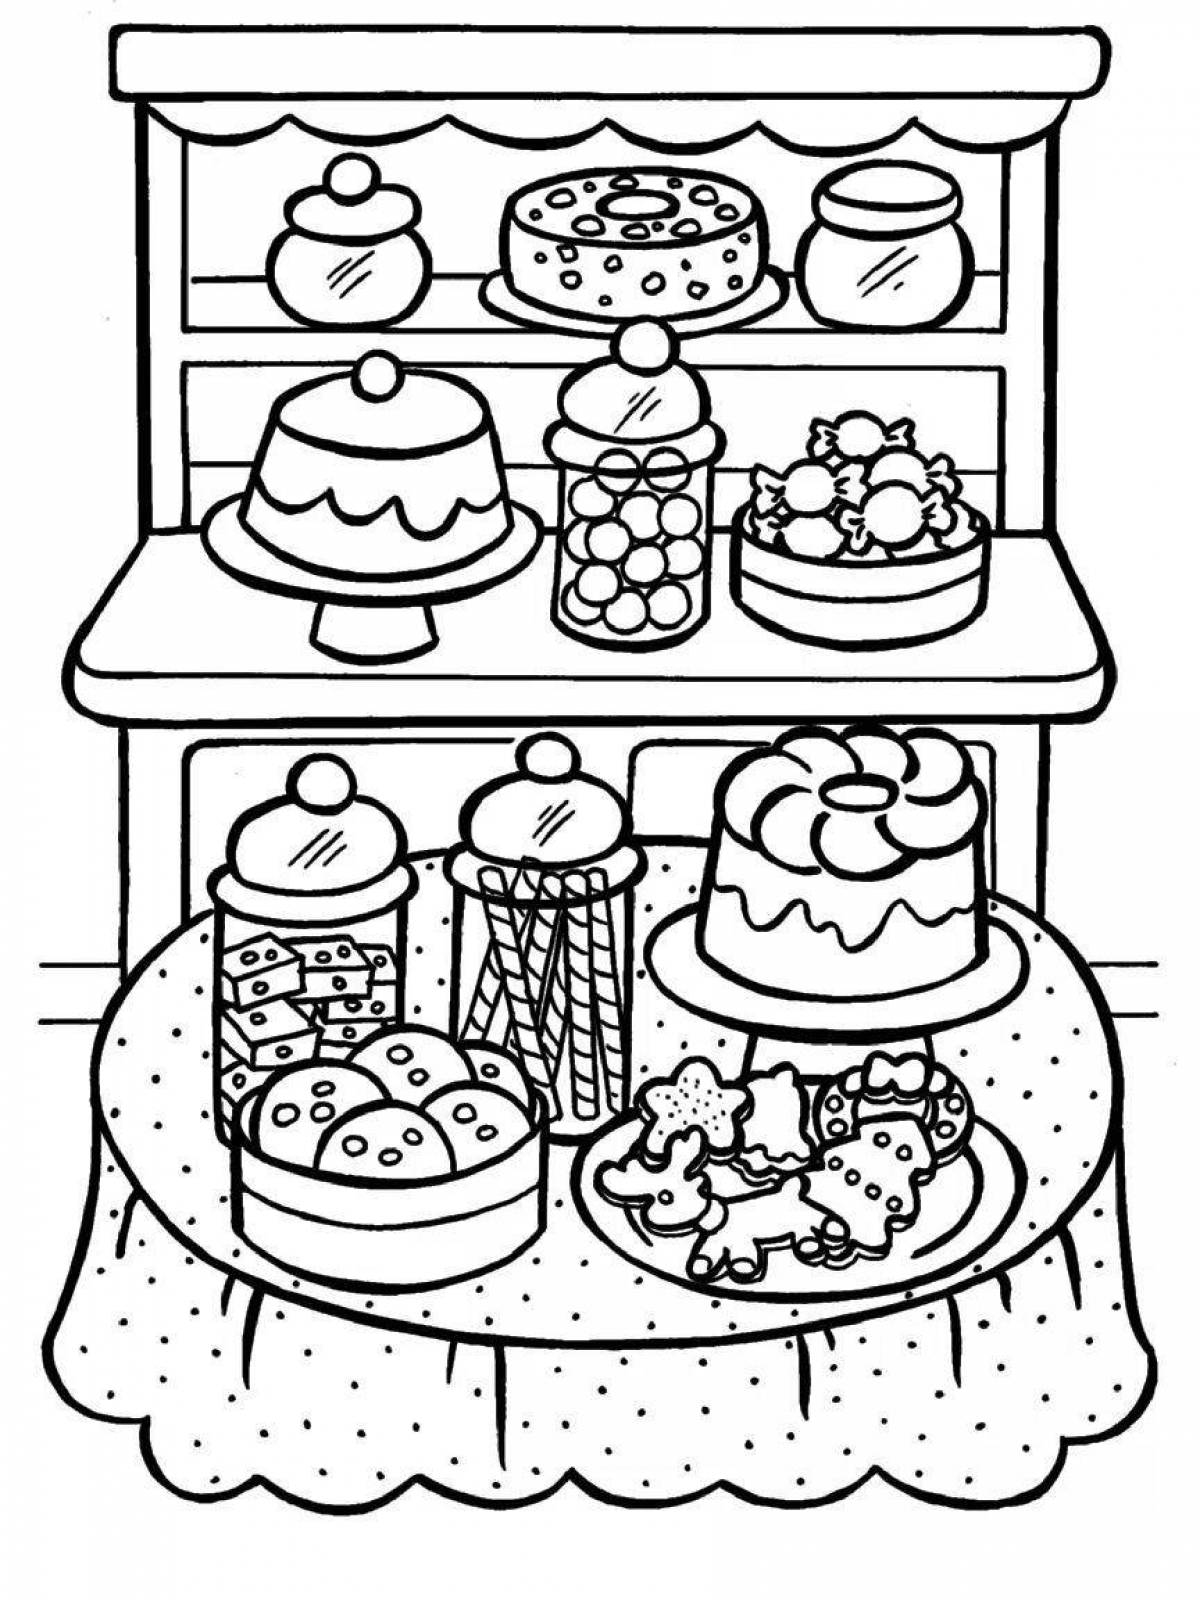 Coloring page joyful sweets